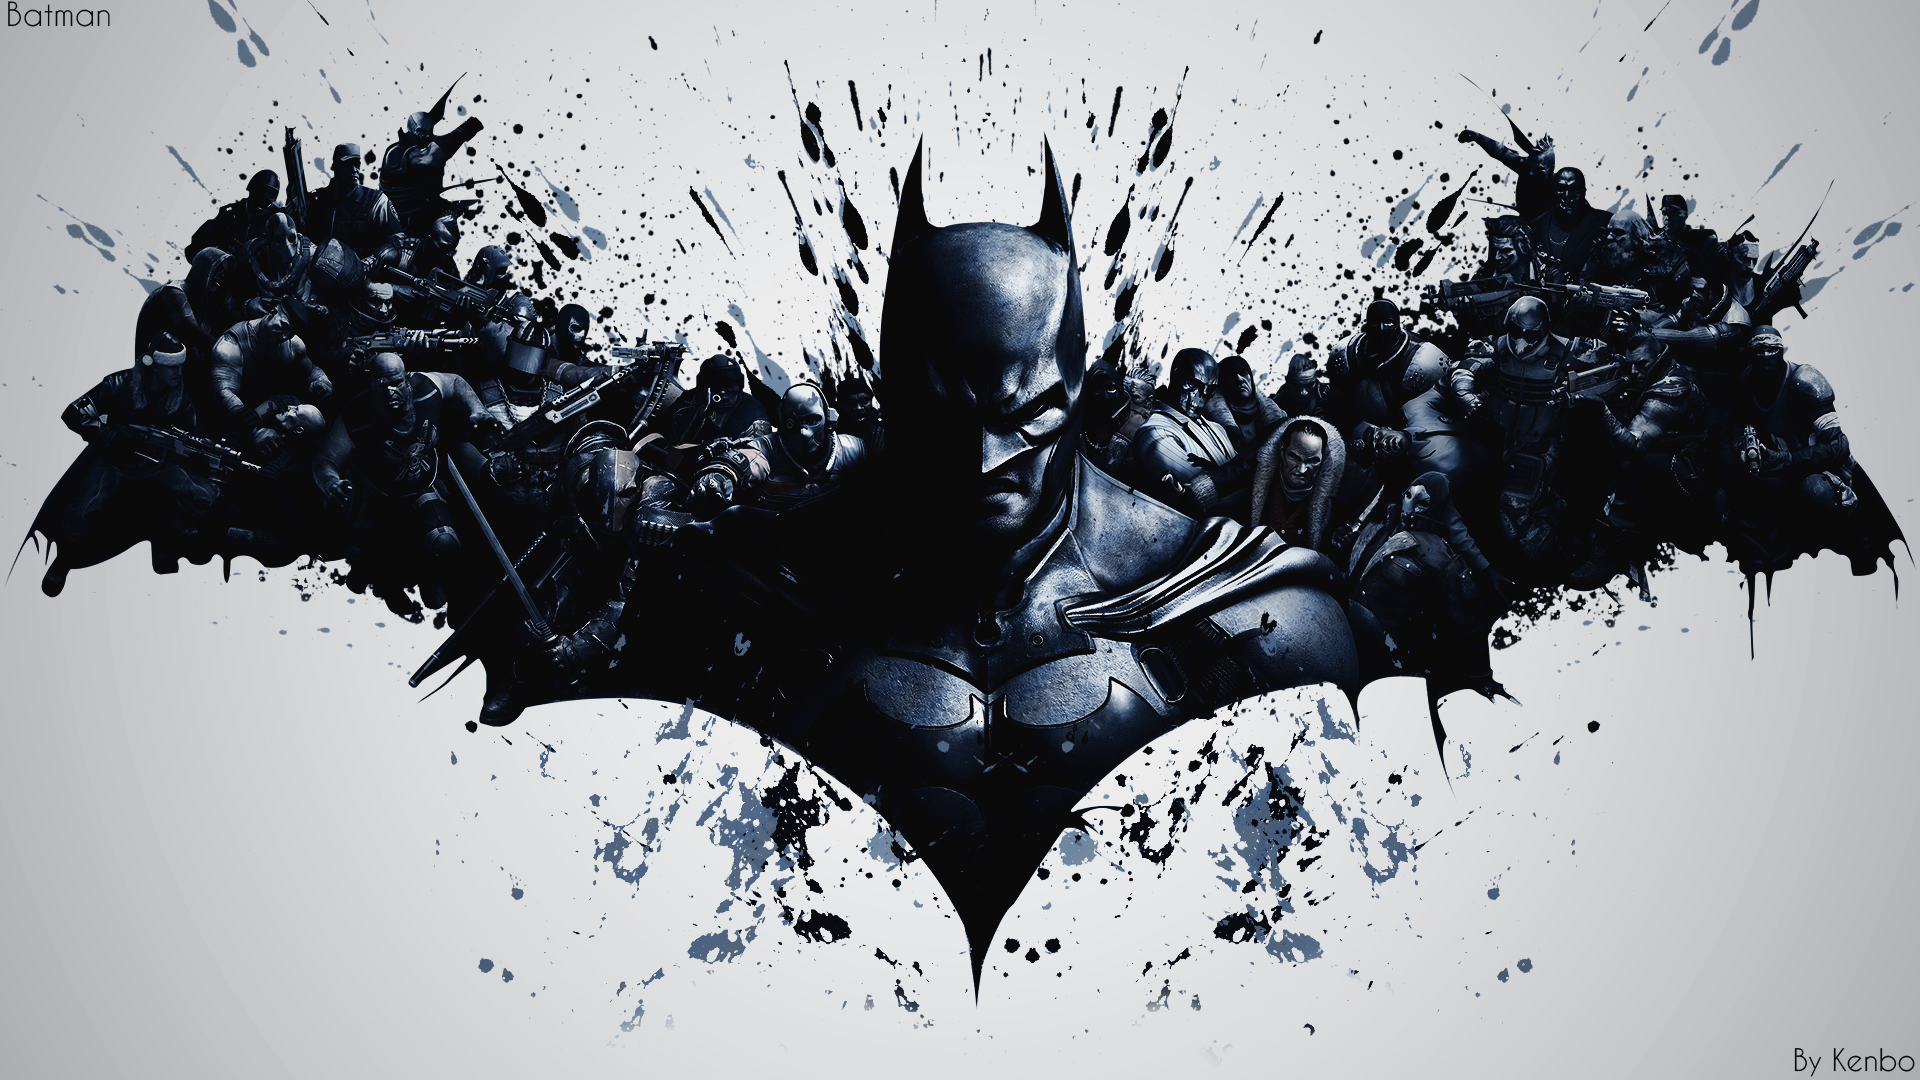 Batman Batman Logo Batman Arkham Origins Rocksteady Studios Video Game Art Video Game Heroes 2013 Ye 1920x1080